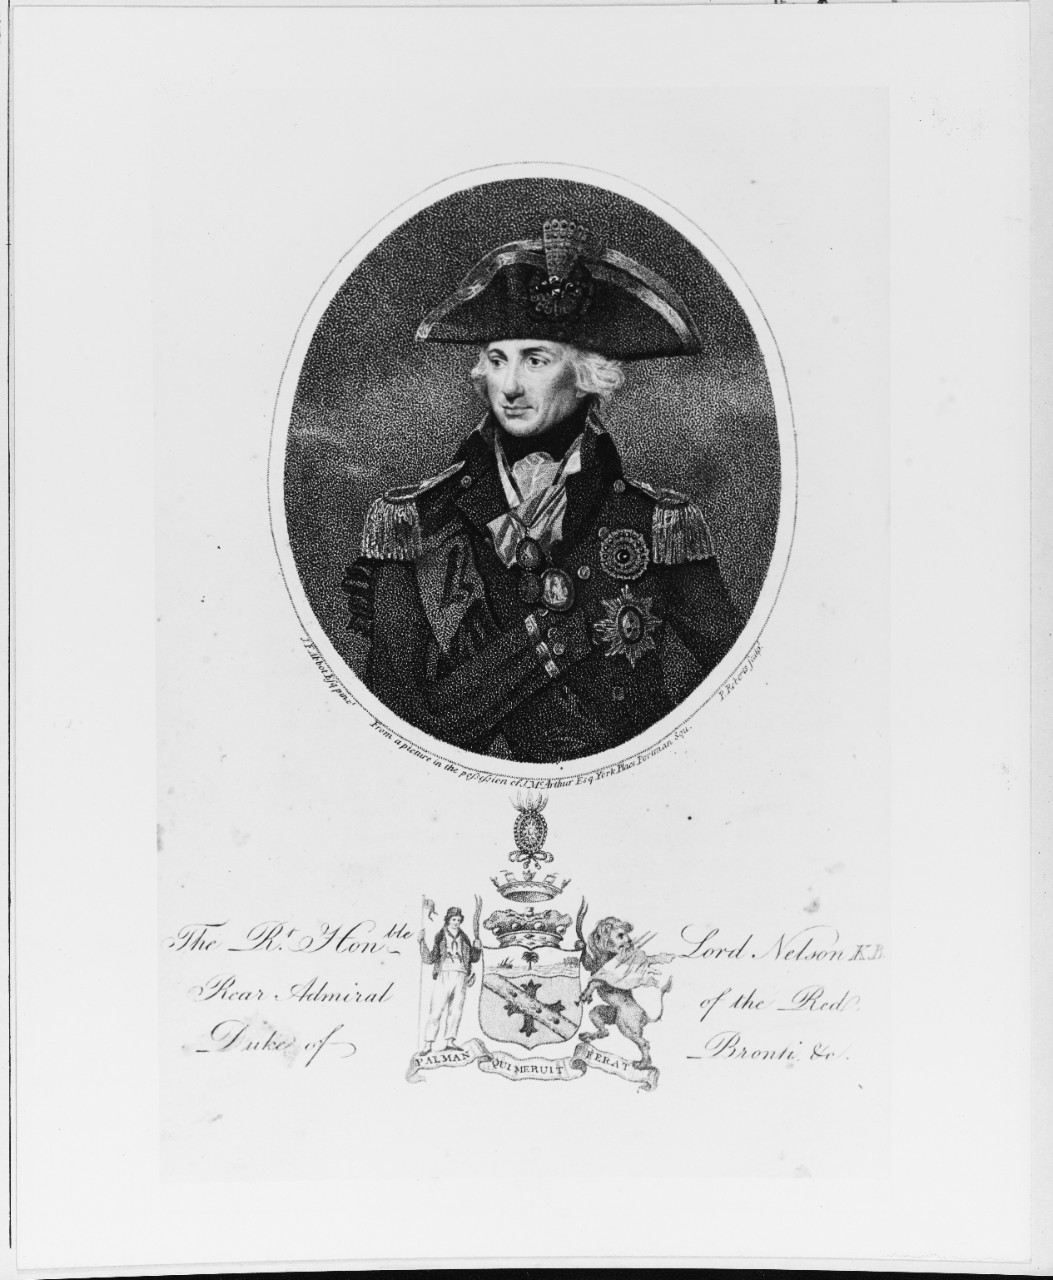 Horatio Nelson, Royal Navy Officer, 1758-1805.